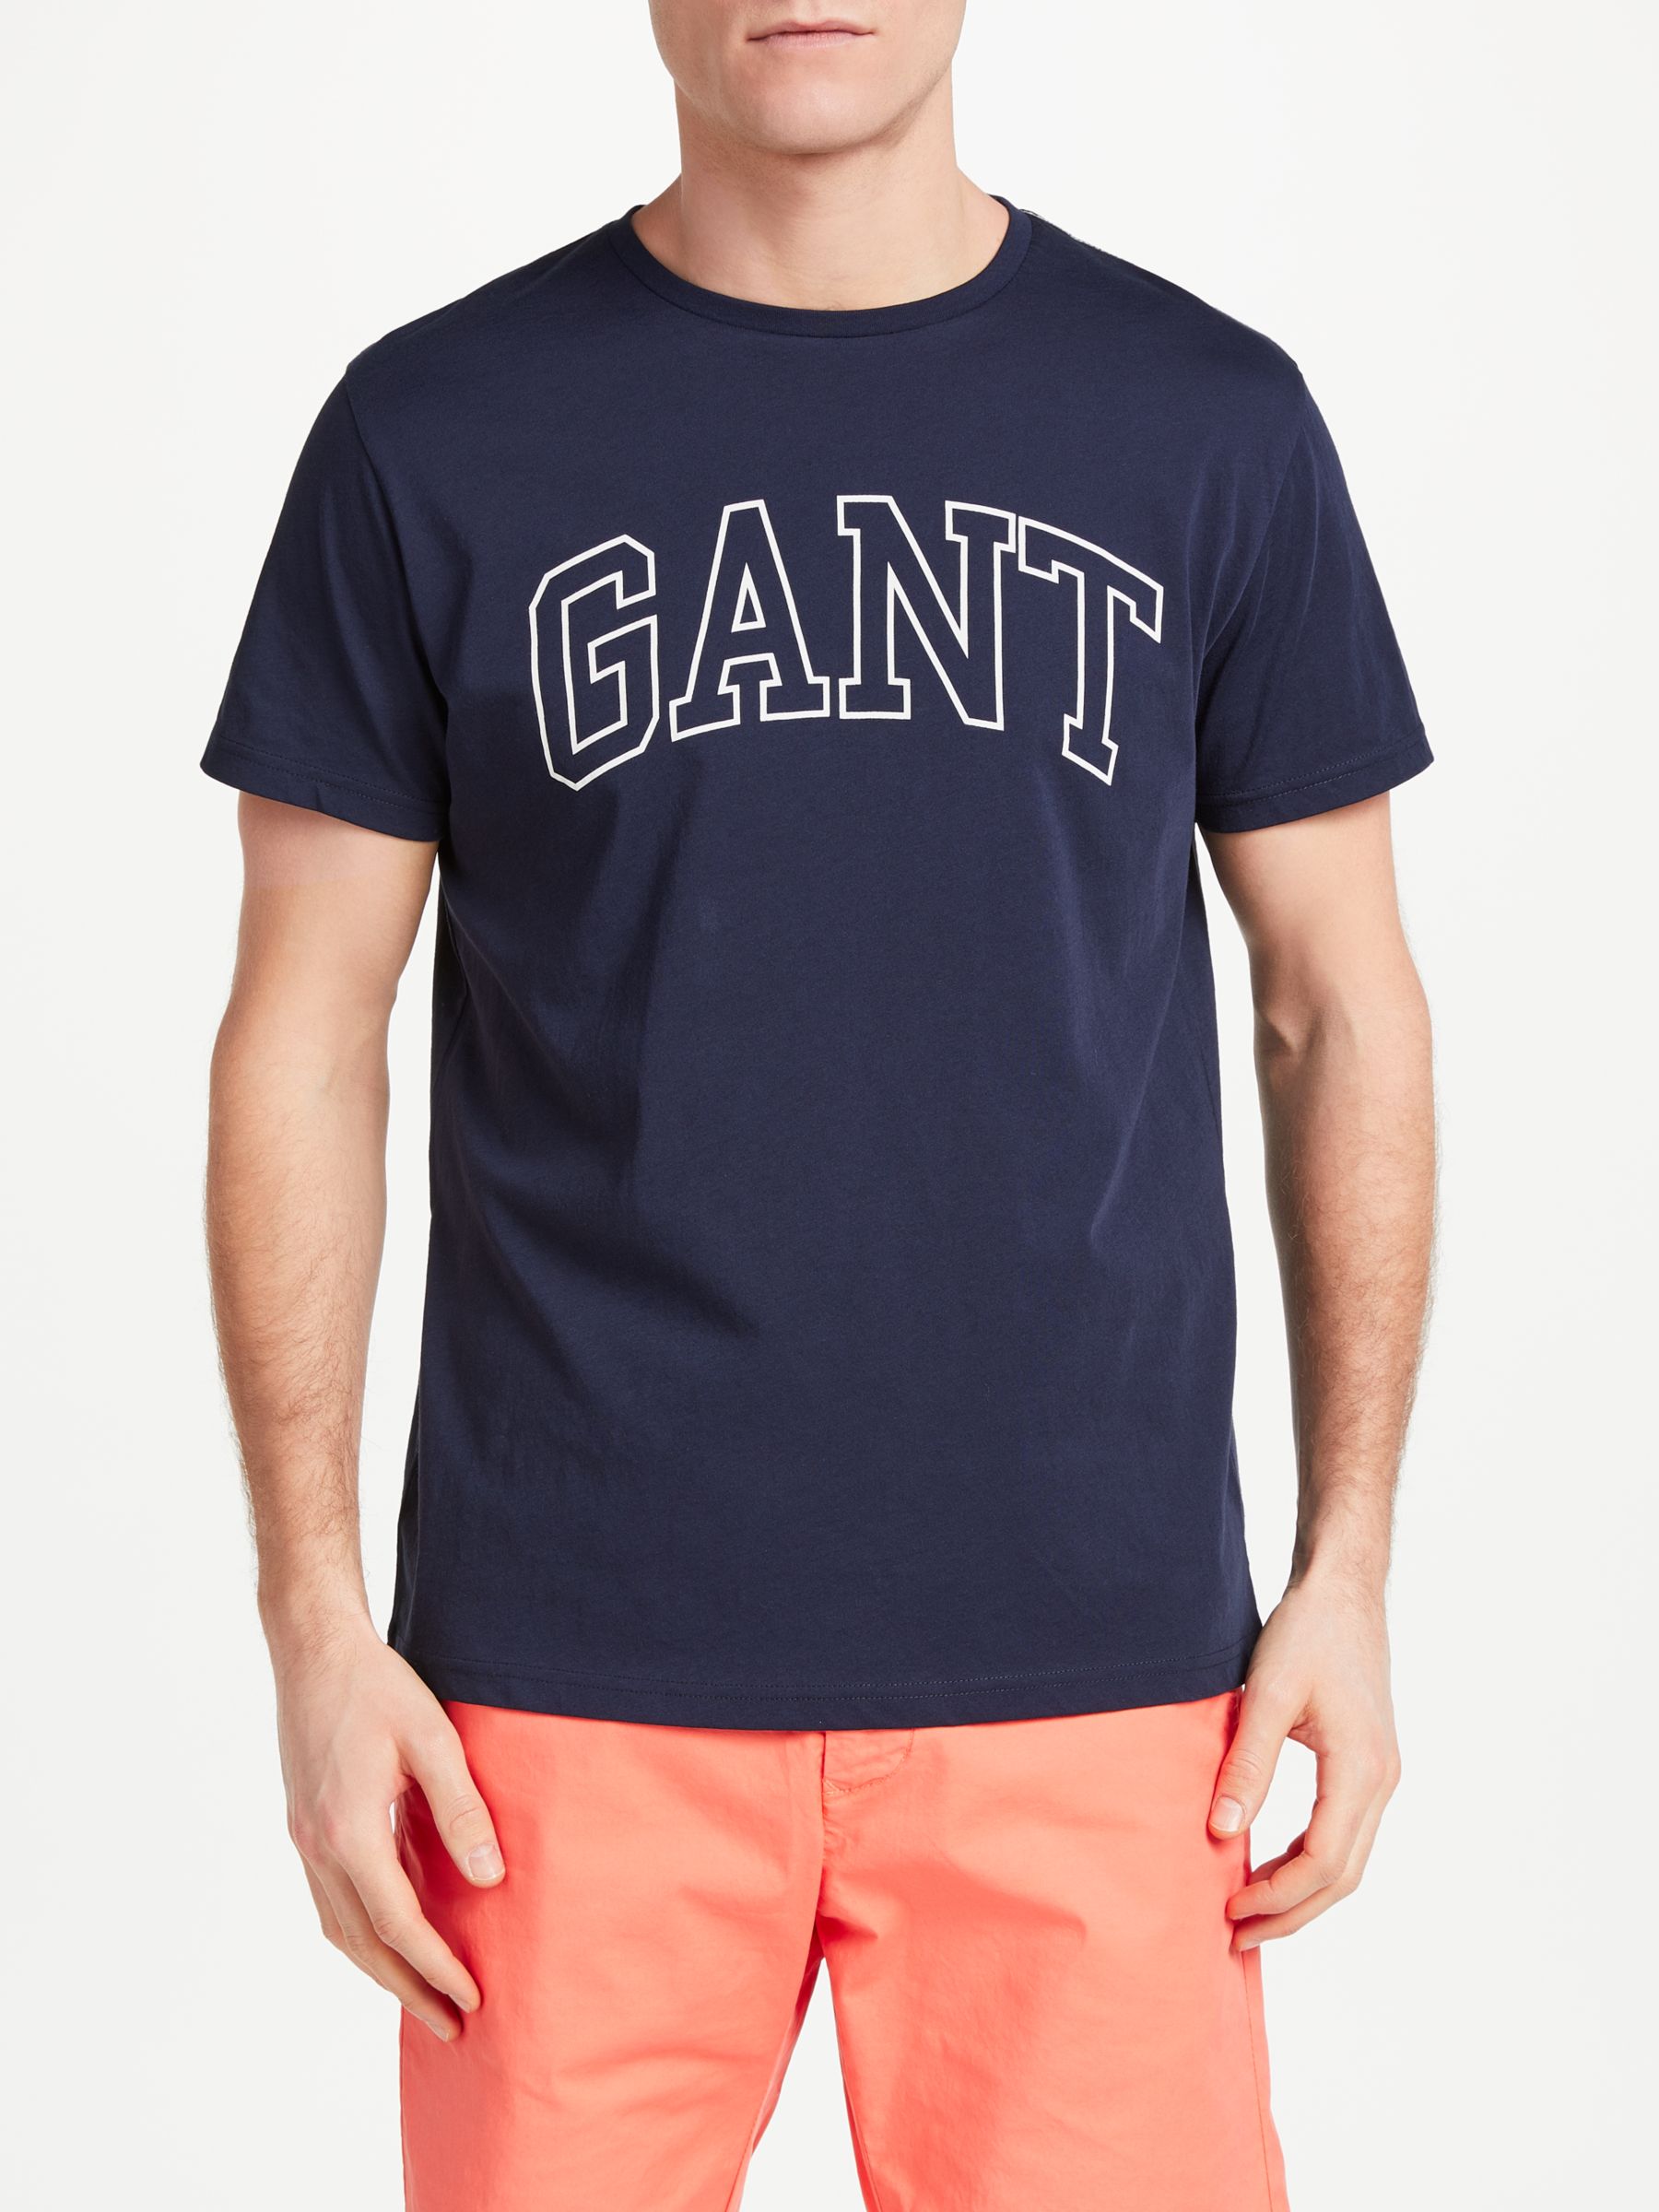 Gant Outline Print Cotton T-Shirt, Navy, S